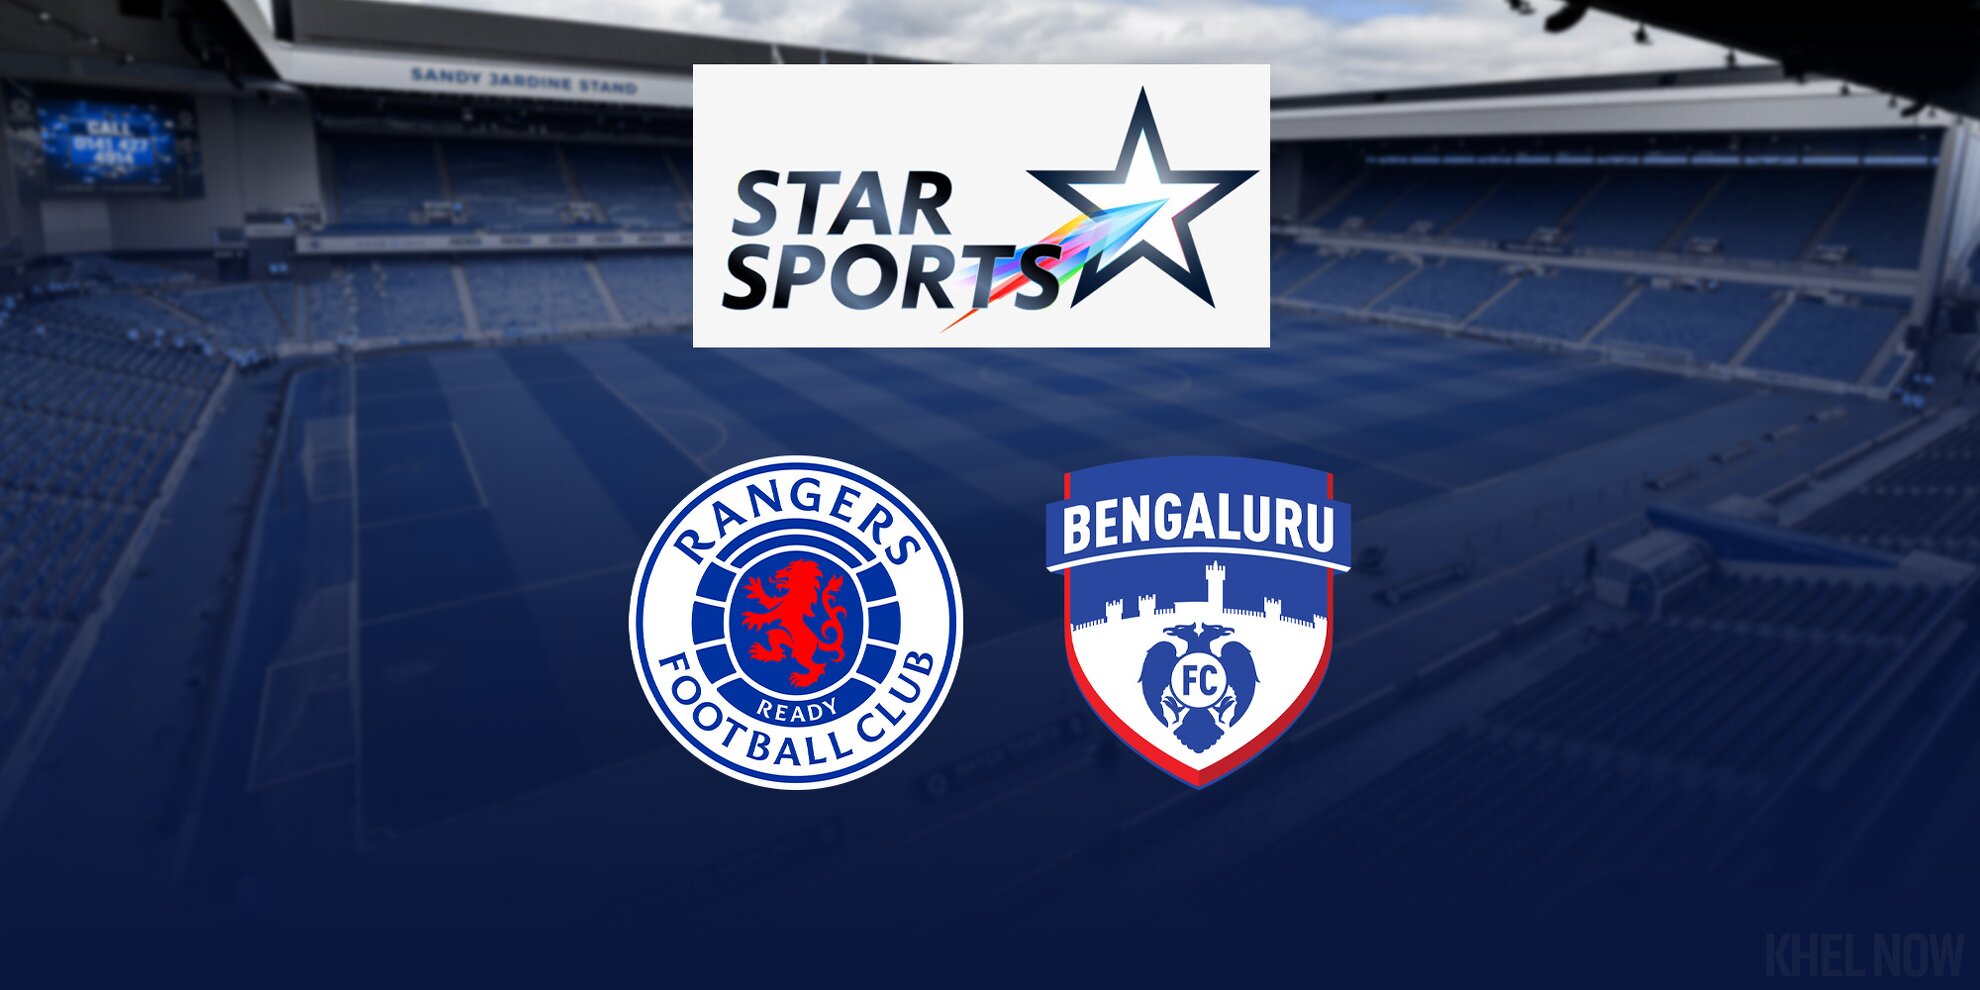 Bengaluru Fc Set To Play Rangers In Summer 2021 At Ibrox Stadium